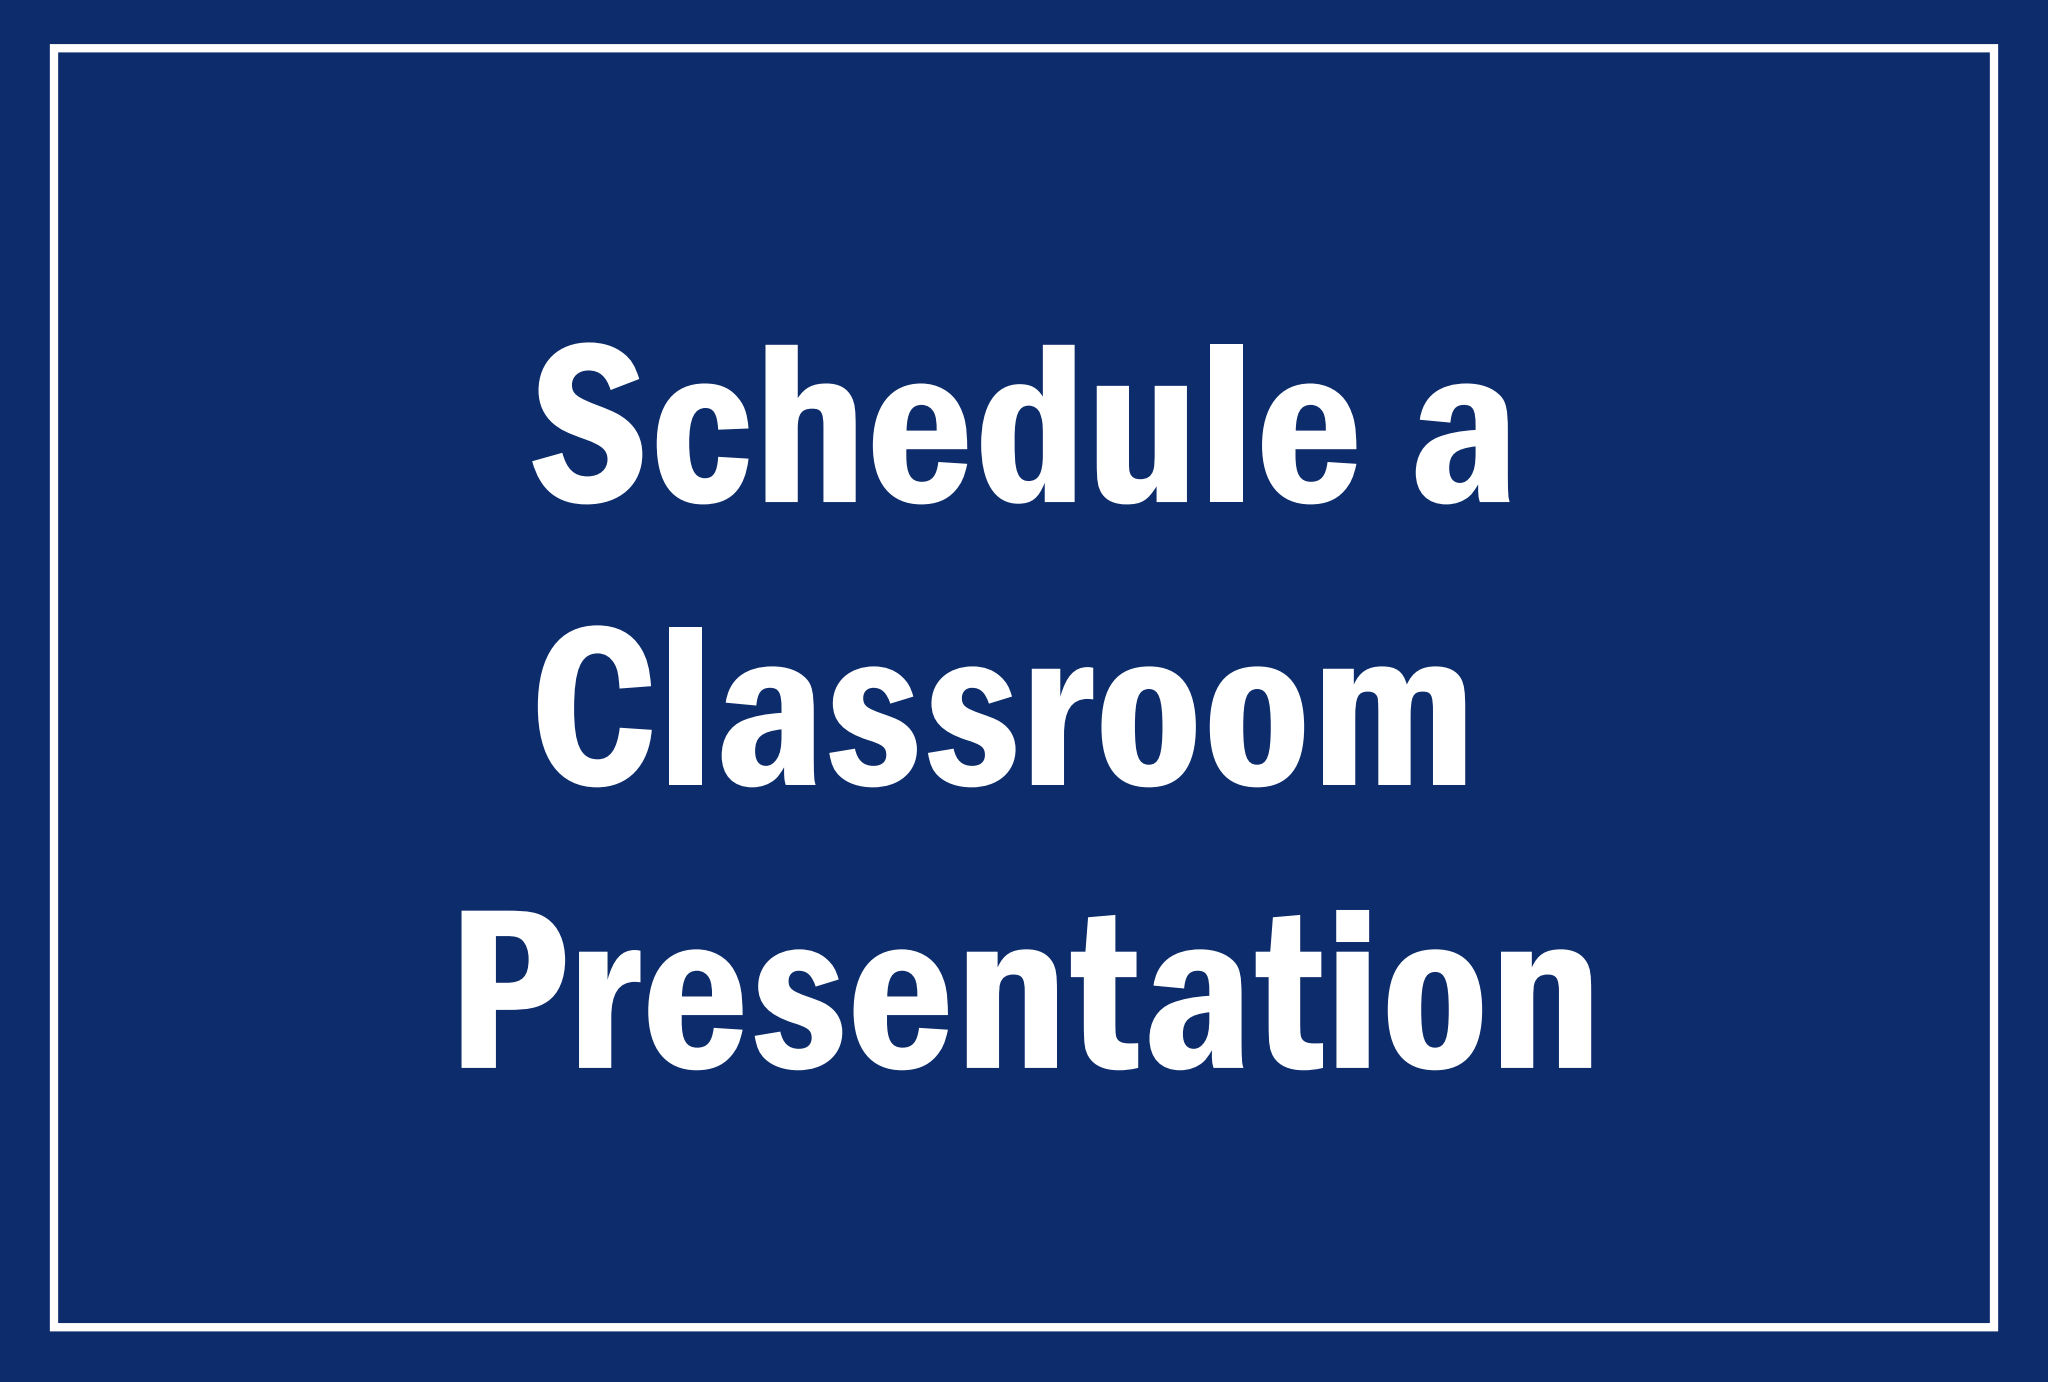 Schedule a Classroom Presentation